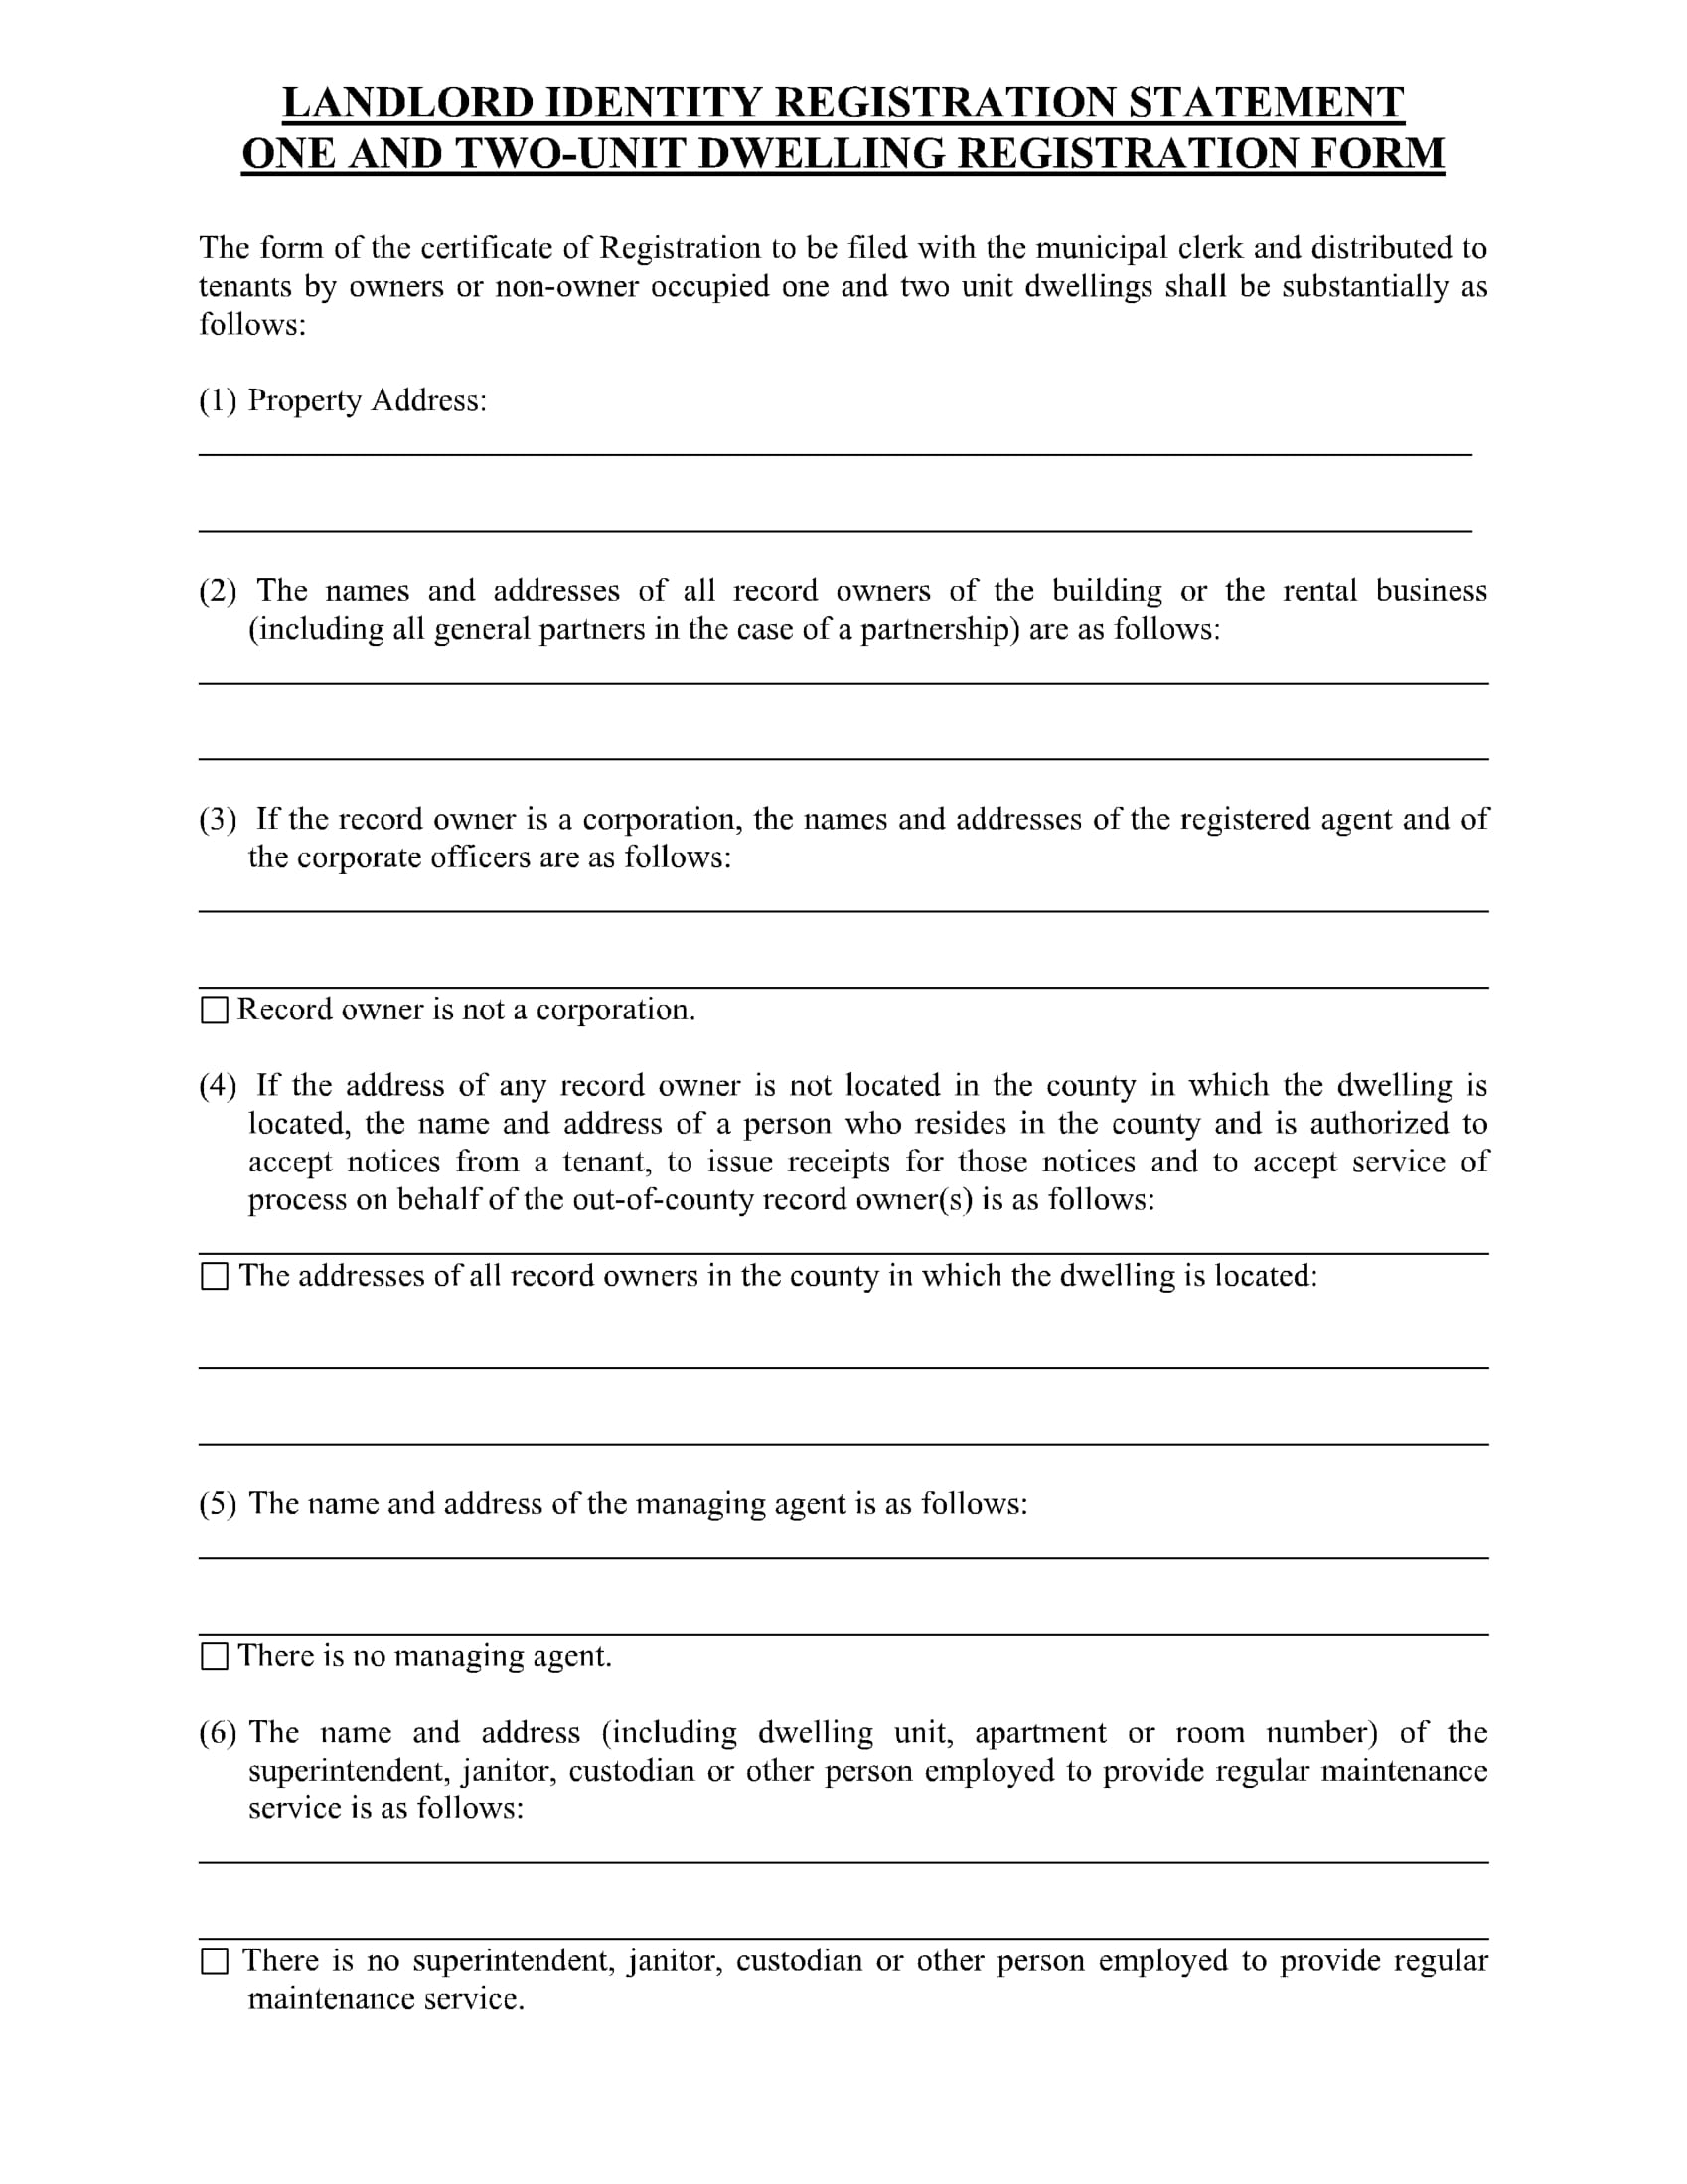 landlord identity registration statement form 2